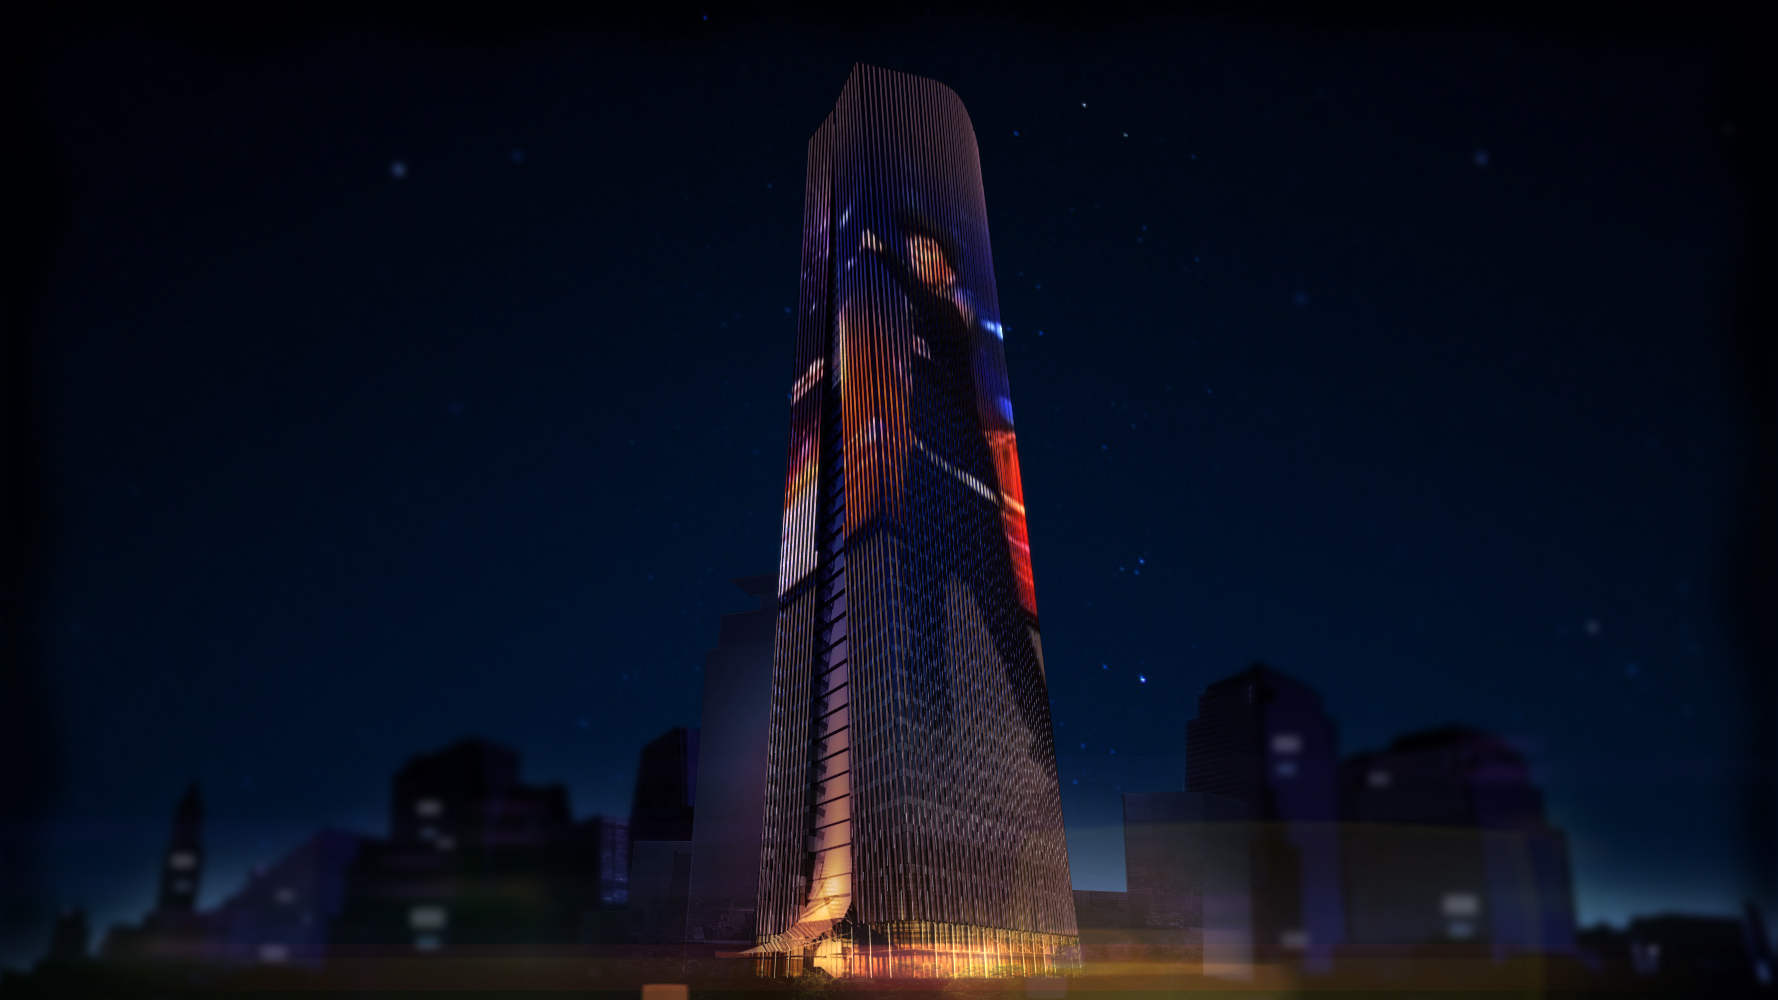 MNC Tower - Media Facade Image4